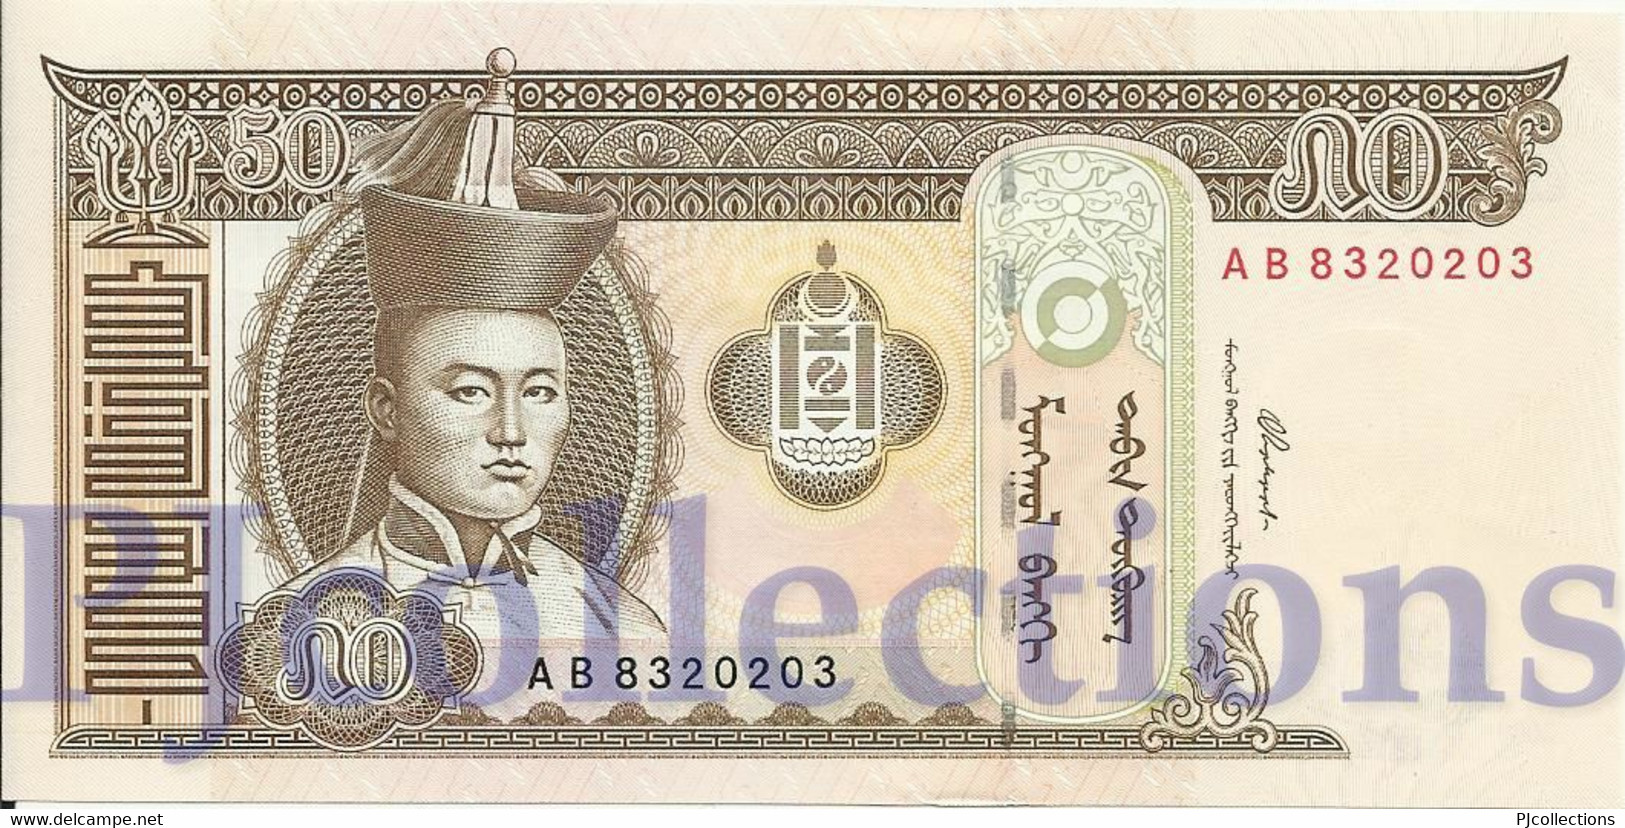 LOT MONGOLIA 50 TUGRIK 2000 PICK 64a UNC X 5 PCS - Lots & Kiloware - Banknotes